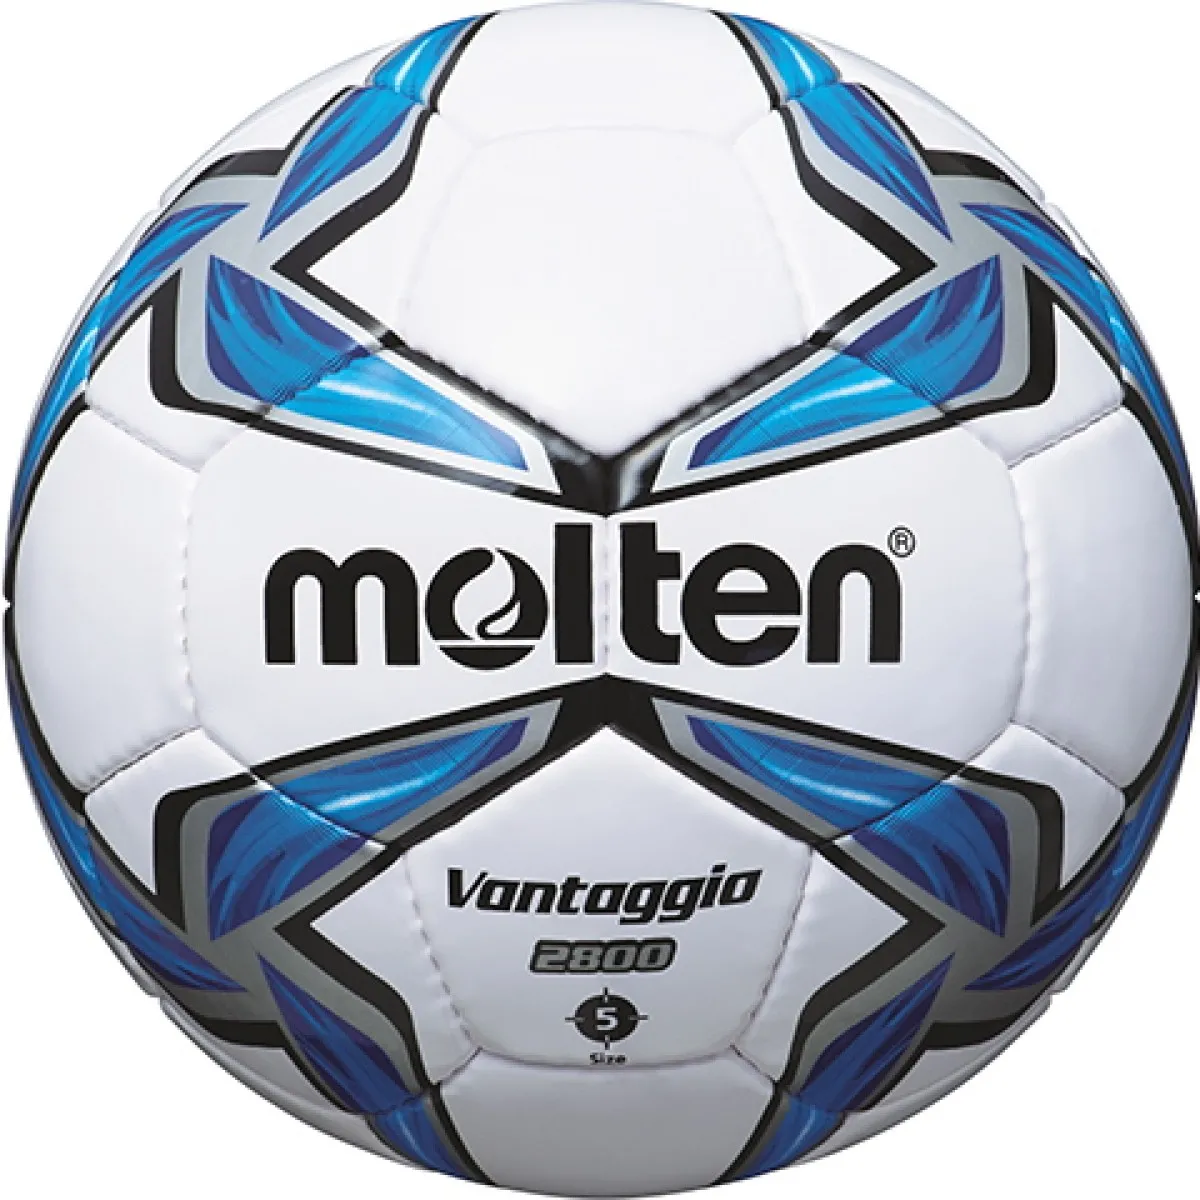 soccer ball size 4, colour white / blue / silver